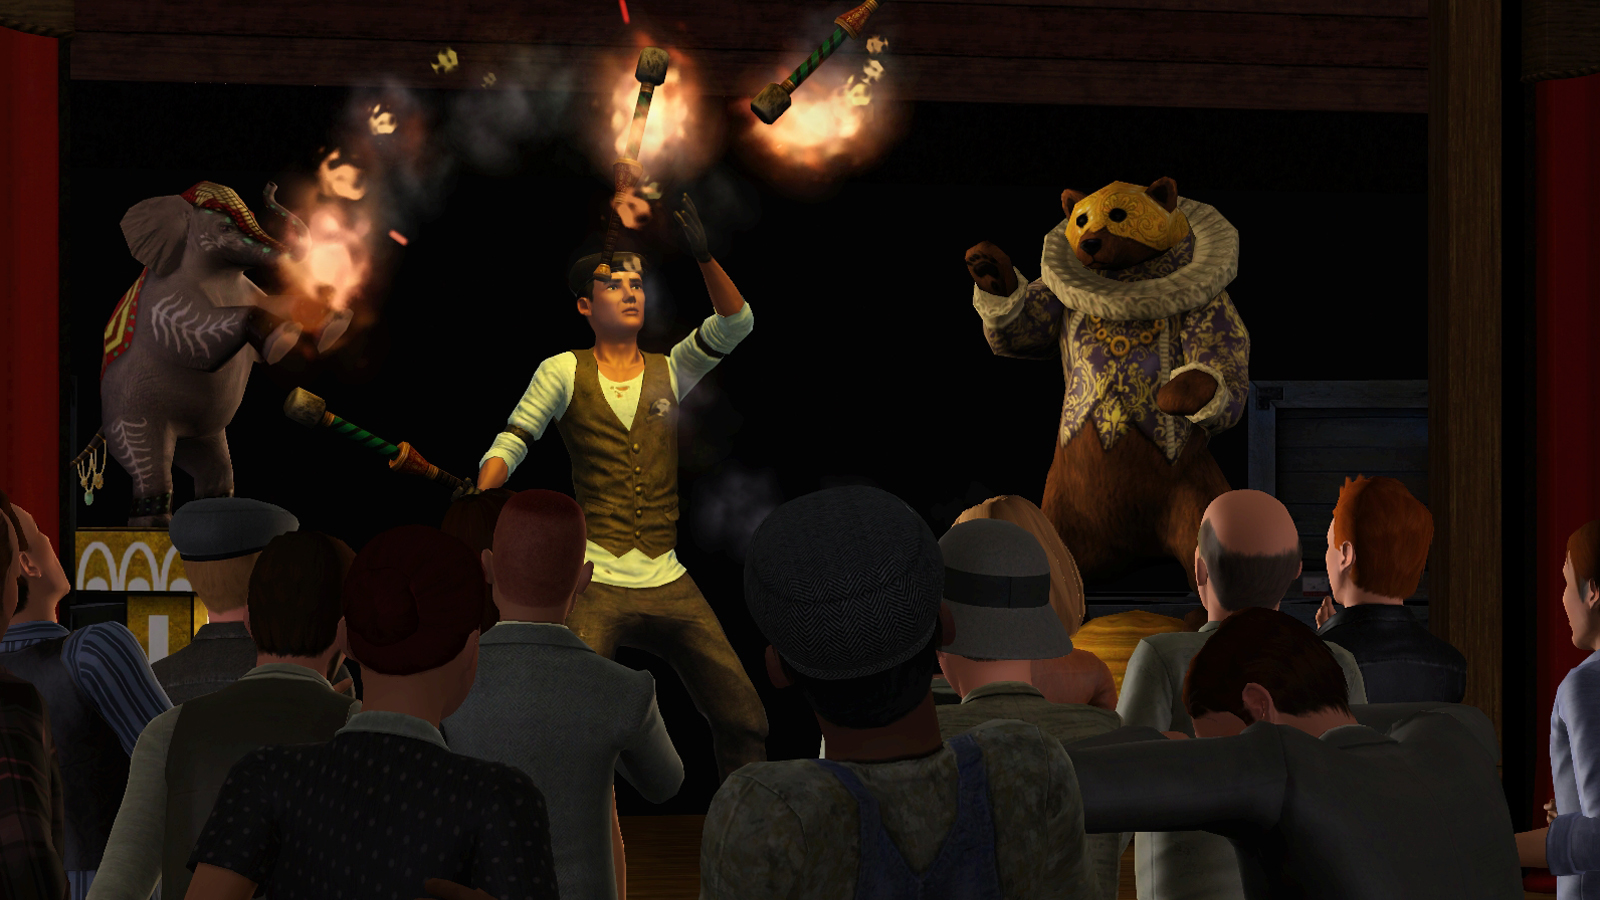 The Sims 3 Showtime screenshot